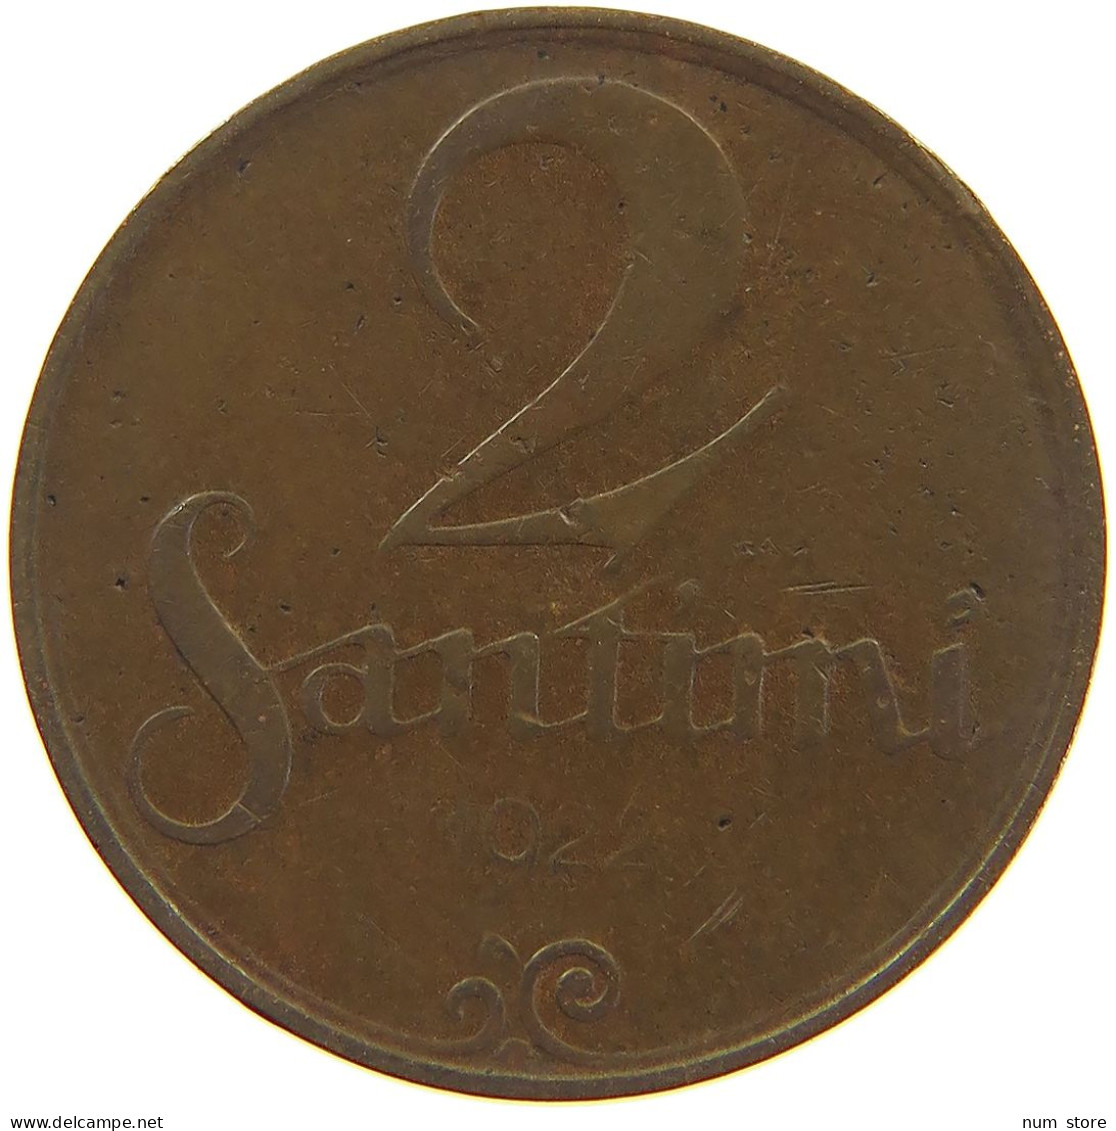 LATVIA 2 SANTIMI 1922  #a066 0763 - Latvia